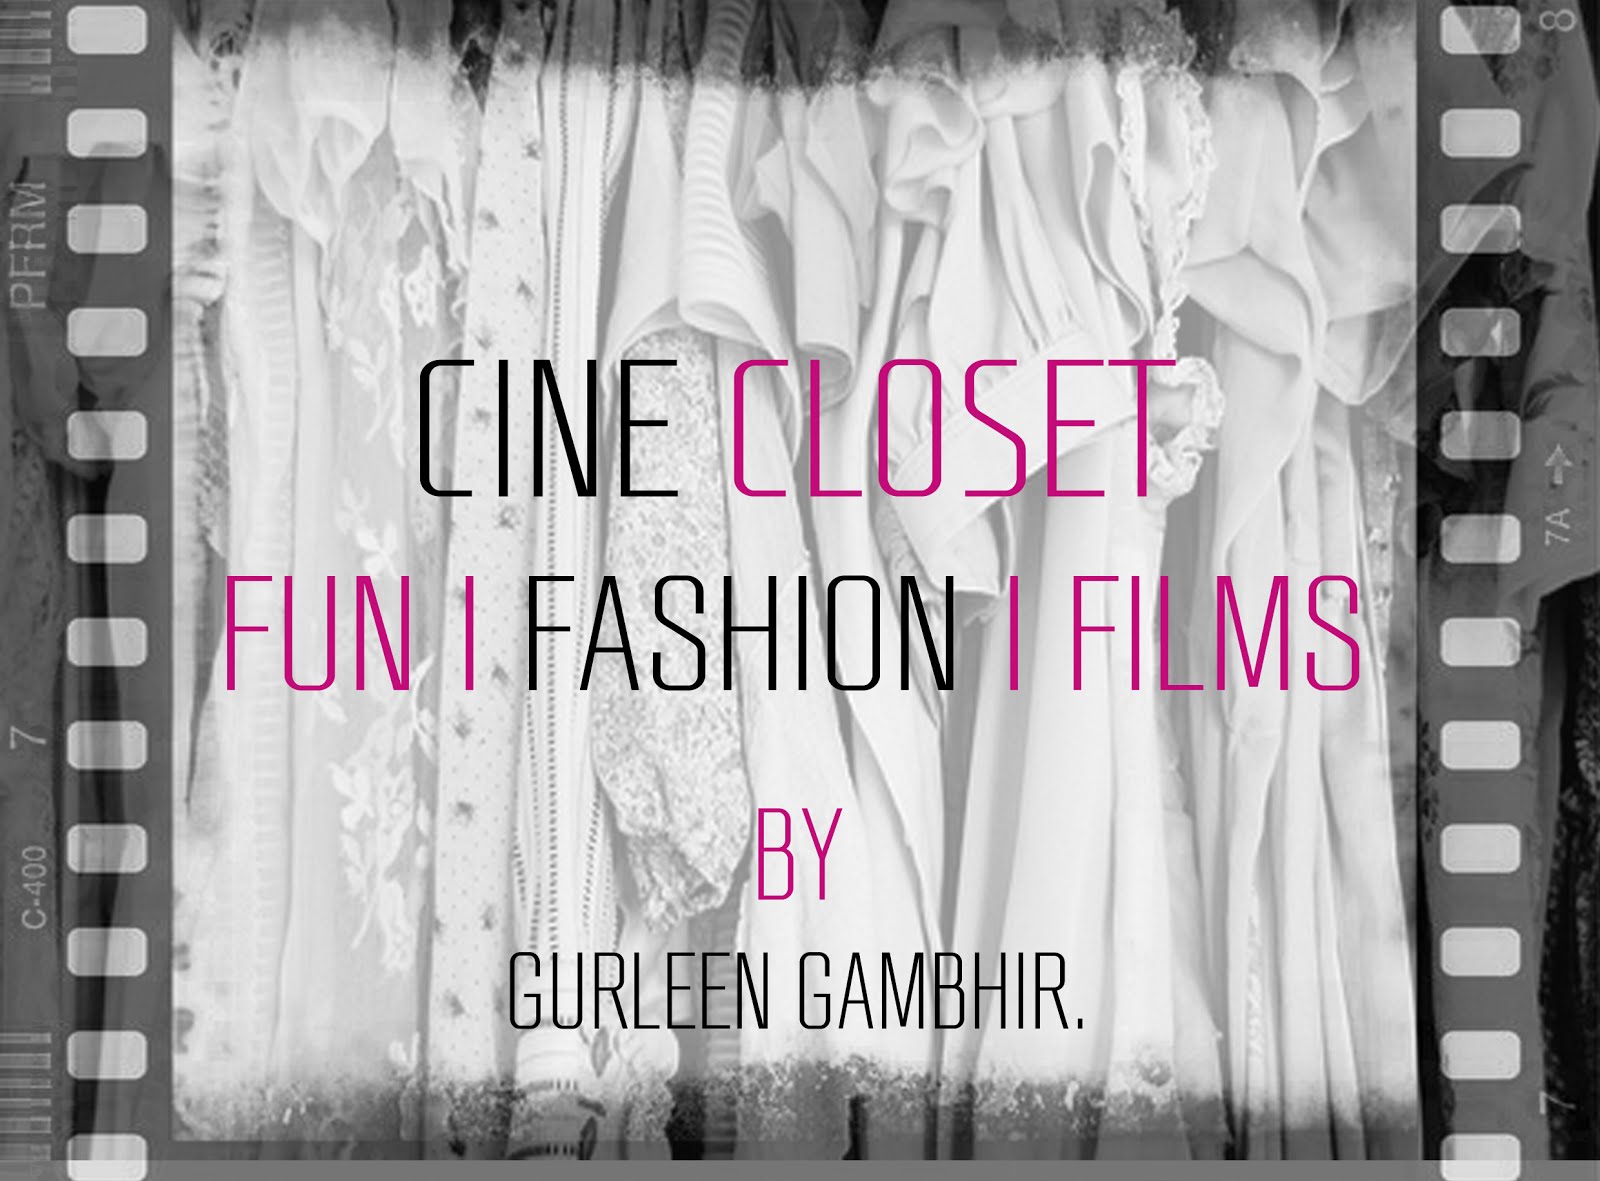 Cine Closet by Gurleen Gambhir